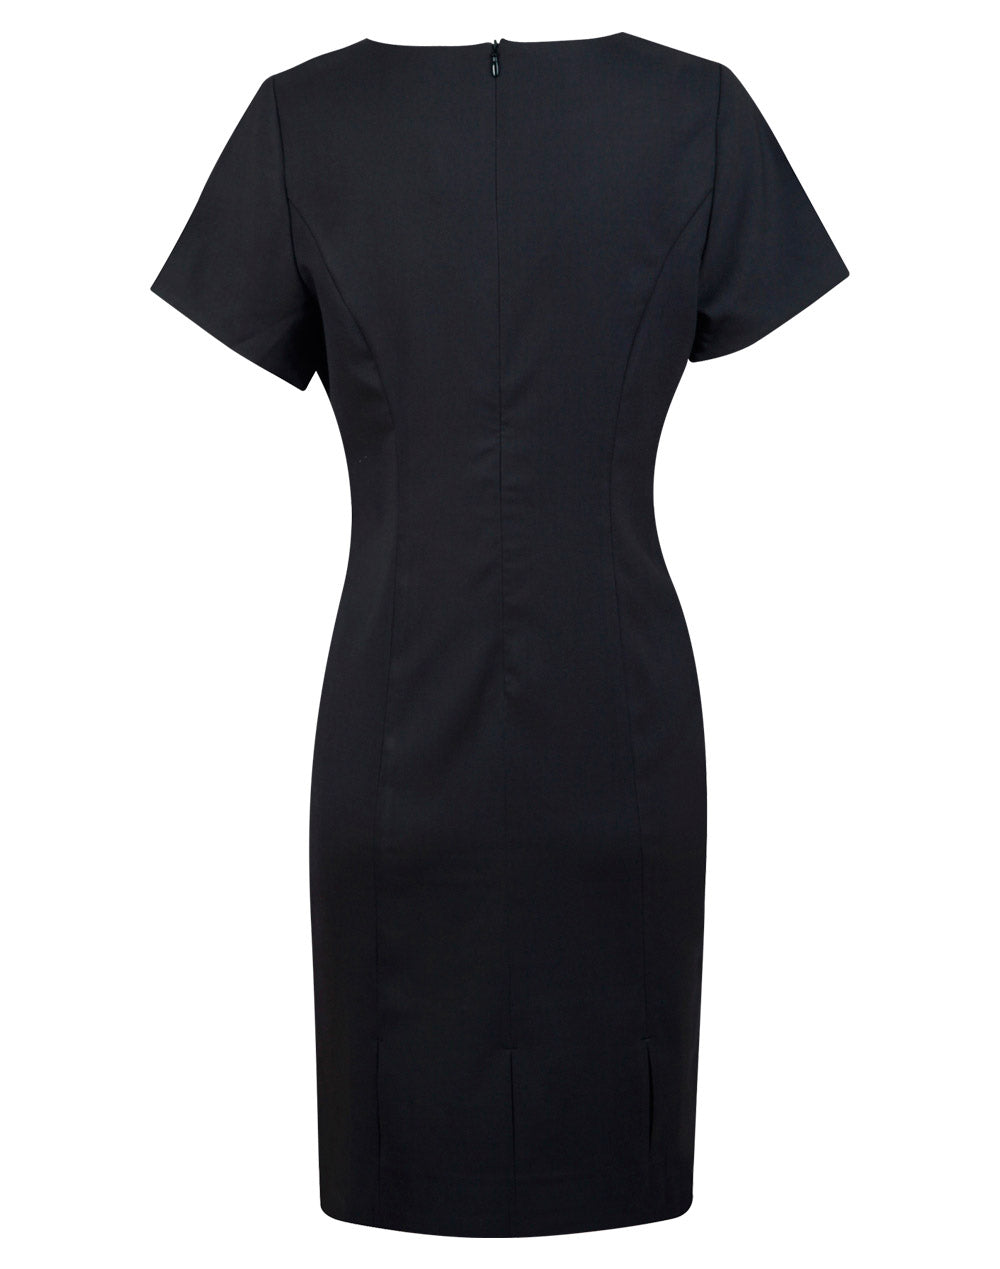 Winning Spirit Ladie's Poly/Viscose Stretch, Short Sleeve Dress (M9282)